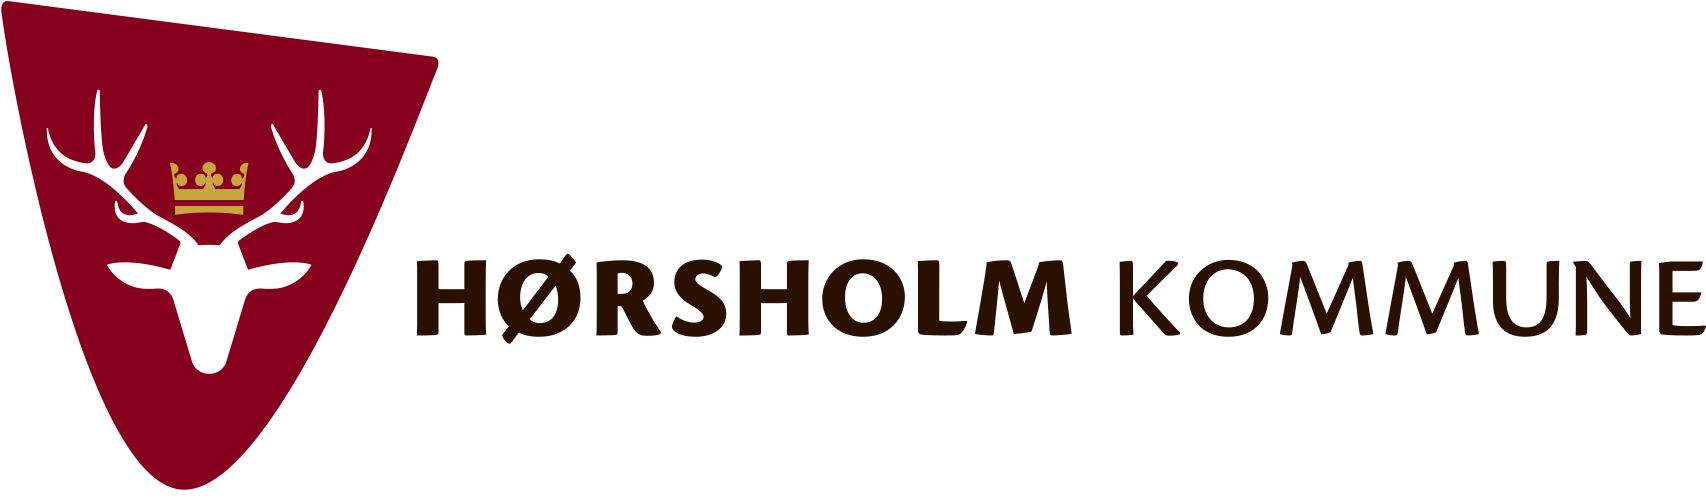 horsholmkommune_logo_